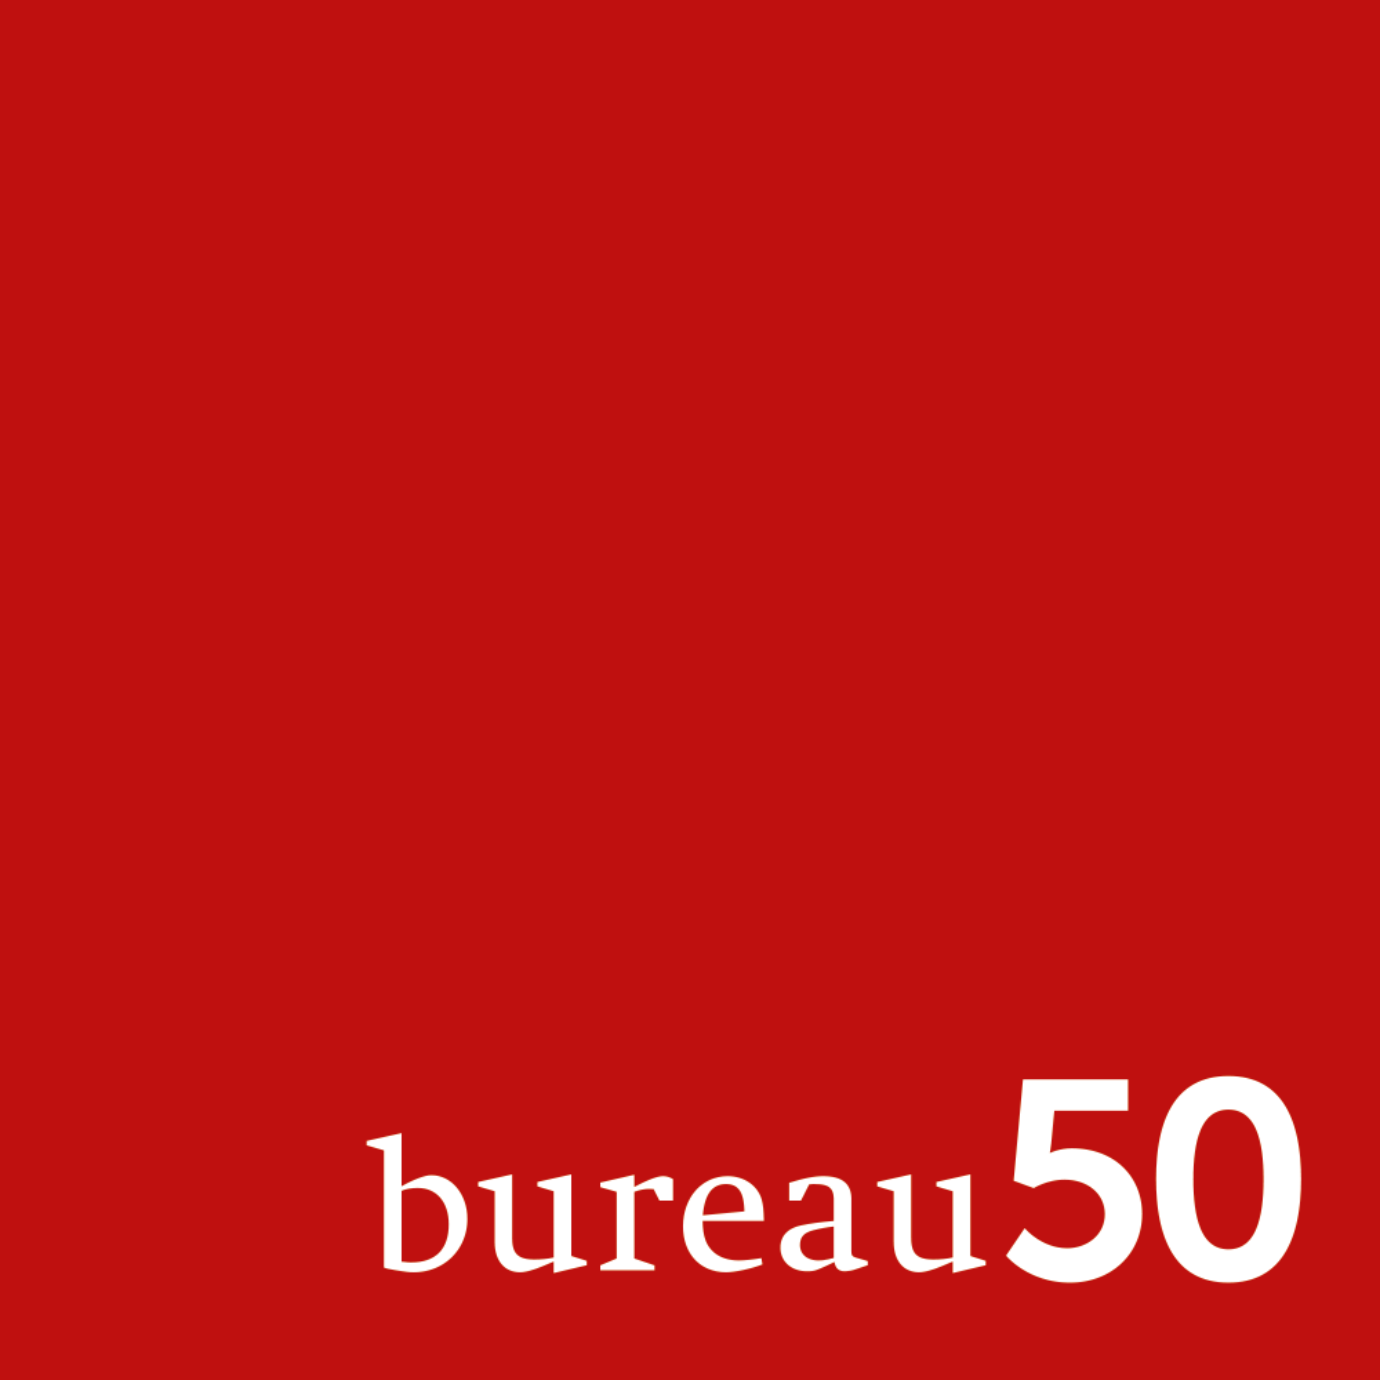 BUREAU50 DEF GEENBE